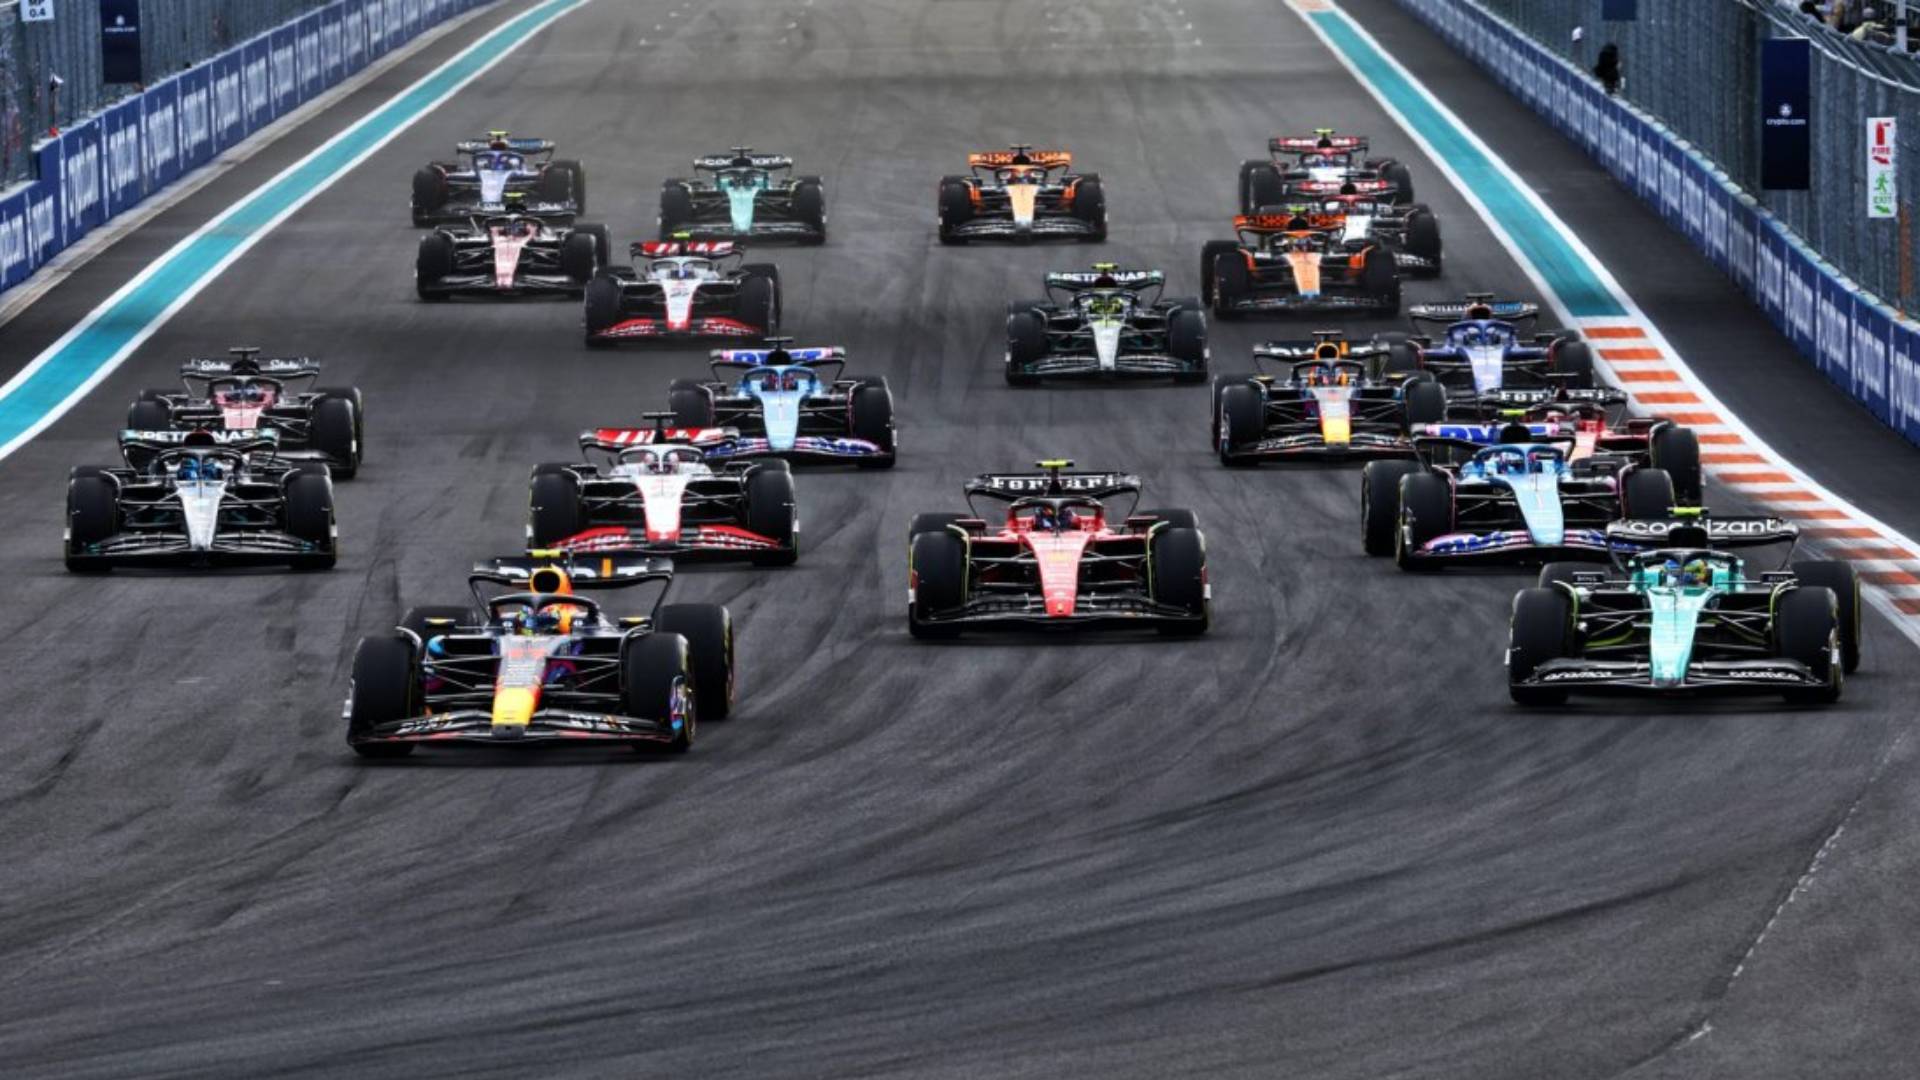 Motor racing-Verstappen wants more focus on car, not Red Bull drama